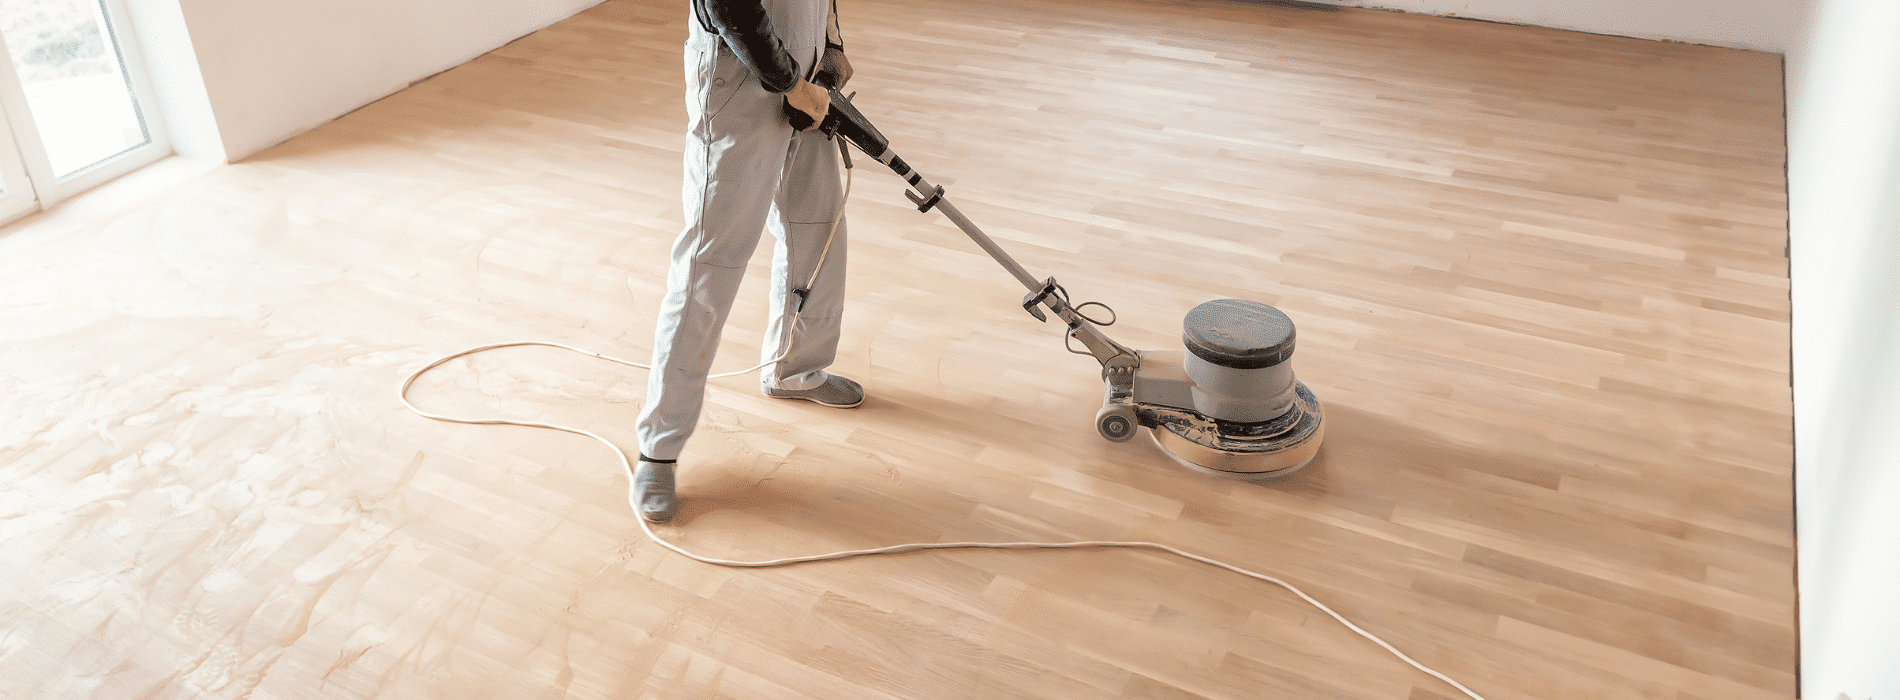 Expert floor sanding in Wapping, E1 using 2.2 kW Bona belt sander on herringbone pattern; 220V, 60Hz machine, size 250x750 mm, delivering impeccable restoration results.